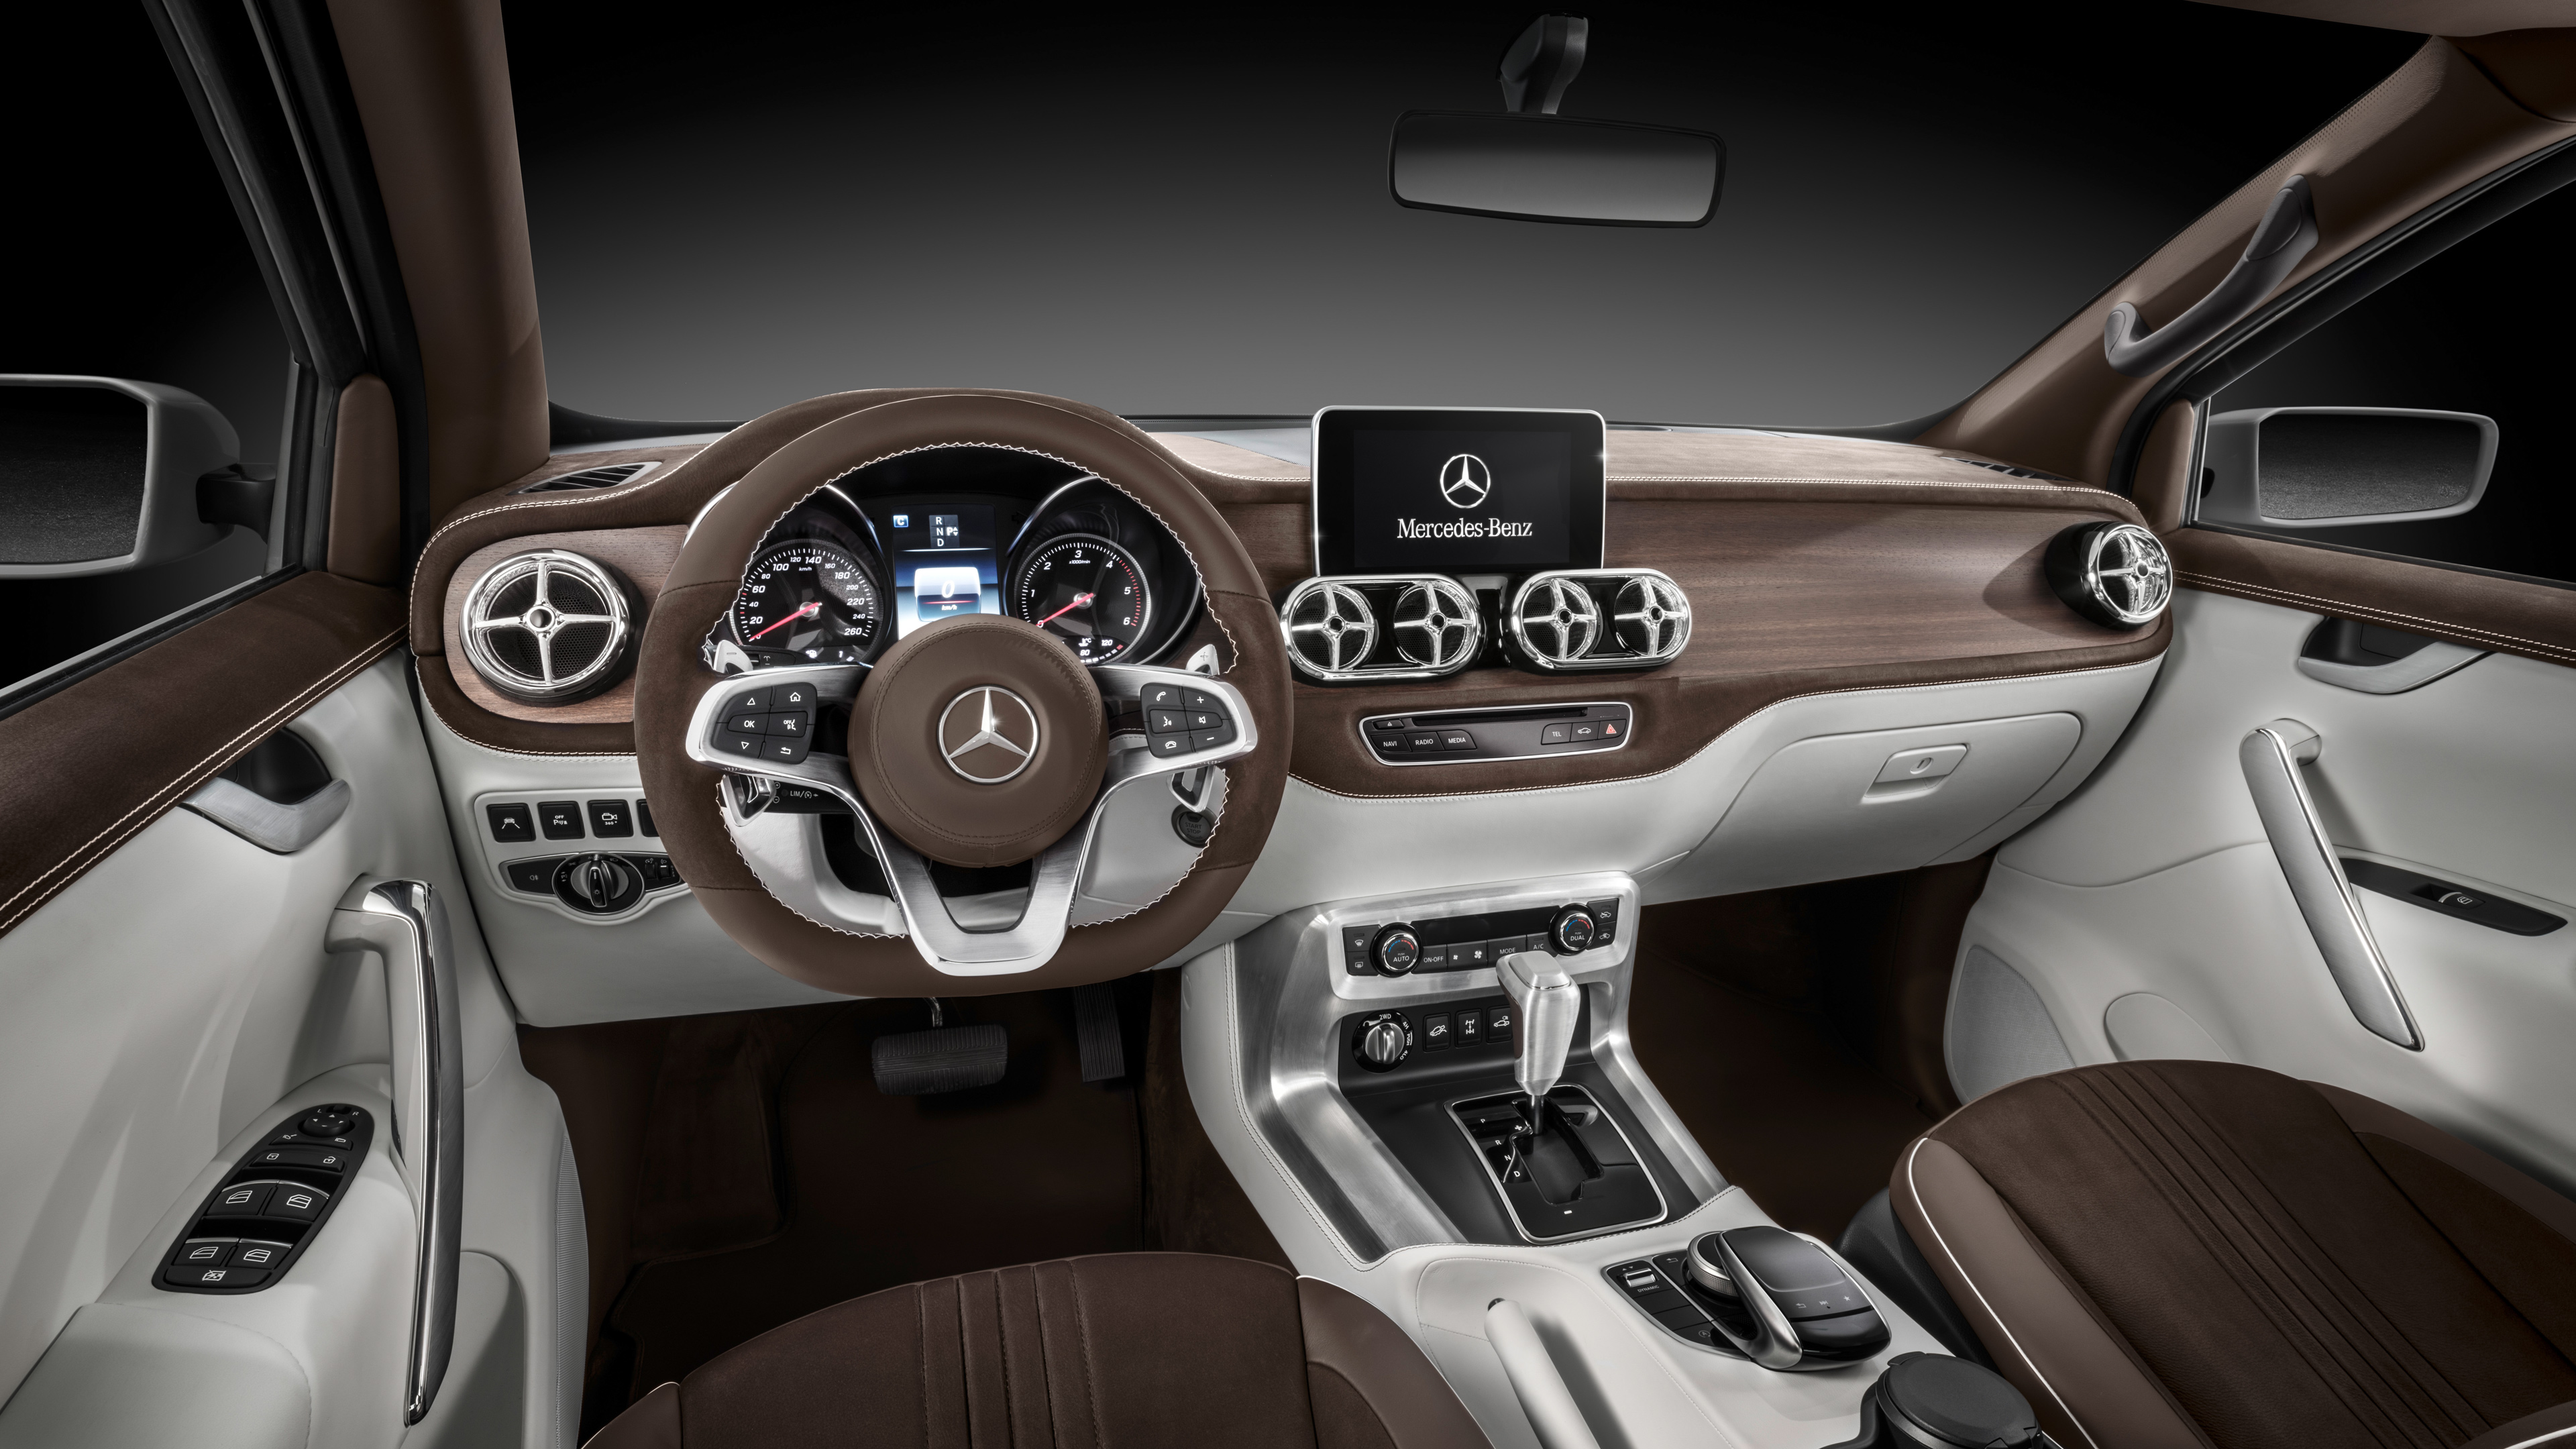 Mercedes Benz X Class new Concept pickup